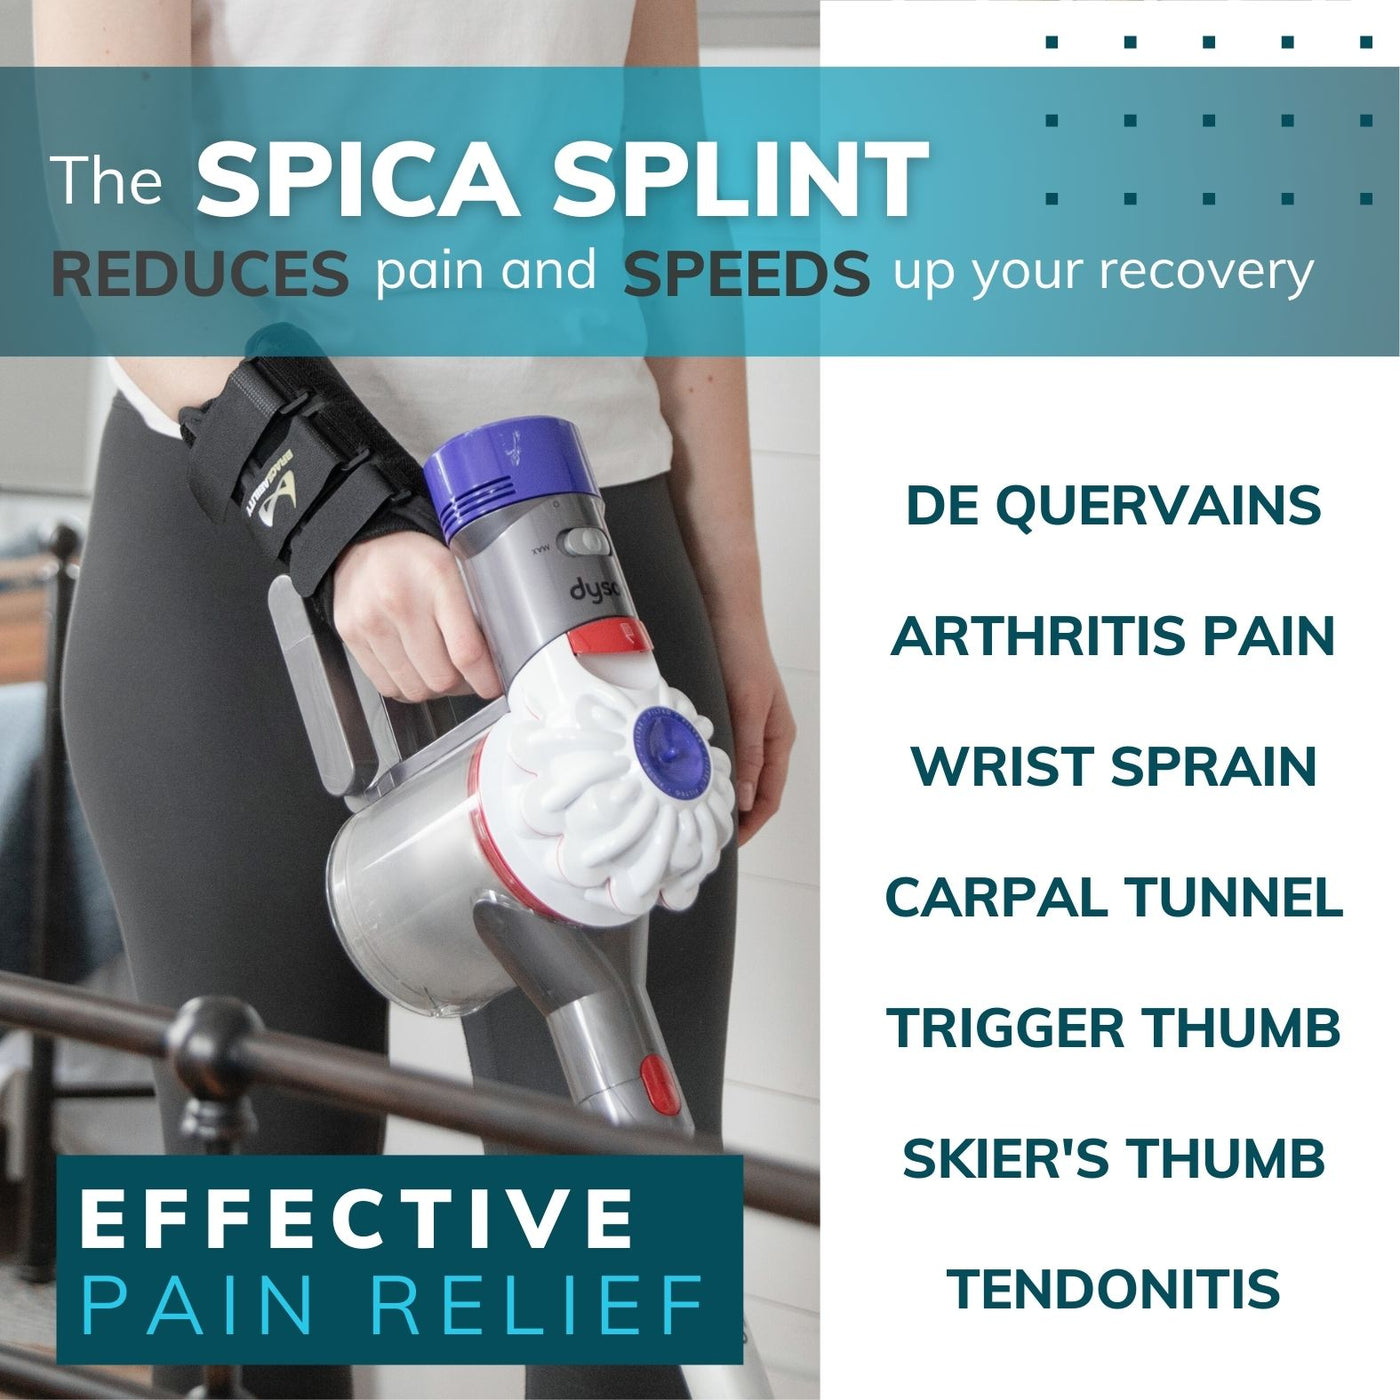 The braceability thumb spica splint reduces pain from arthritis pain, wrist sprain, and trigger thumb